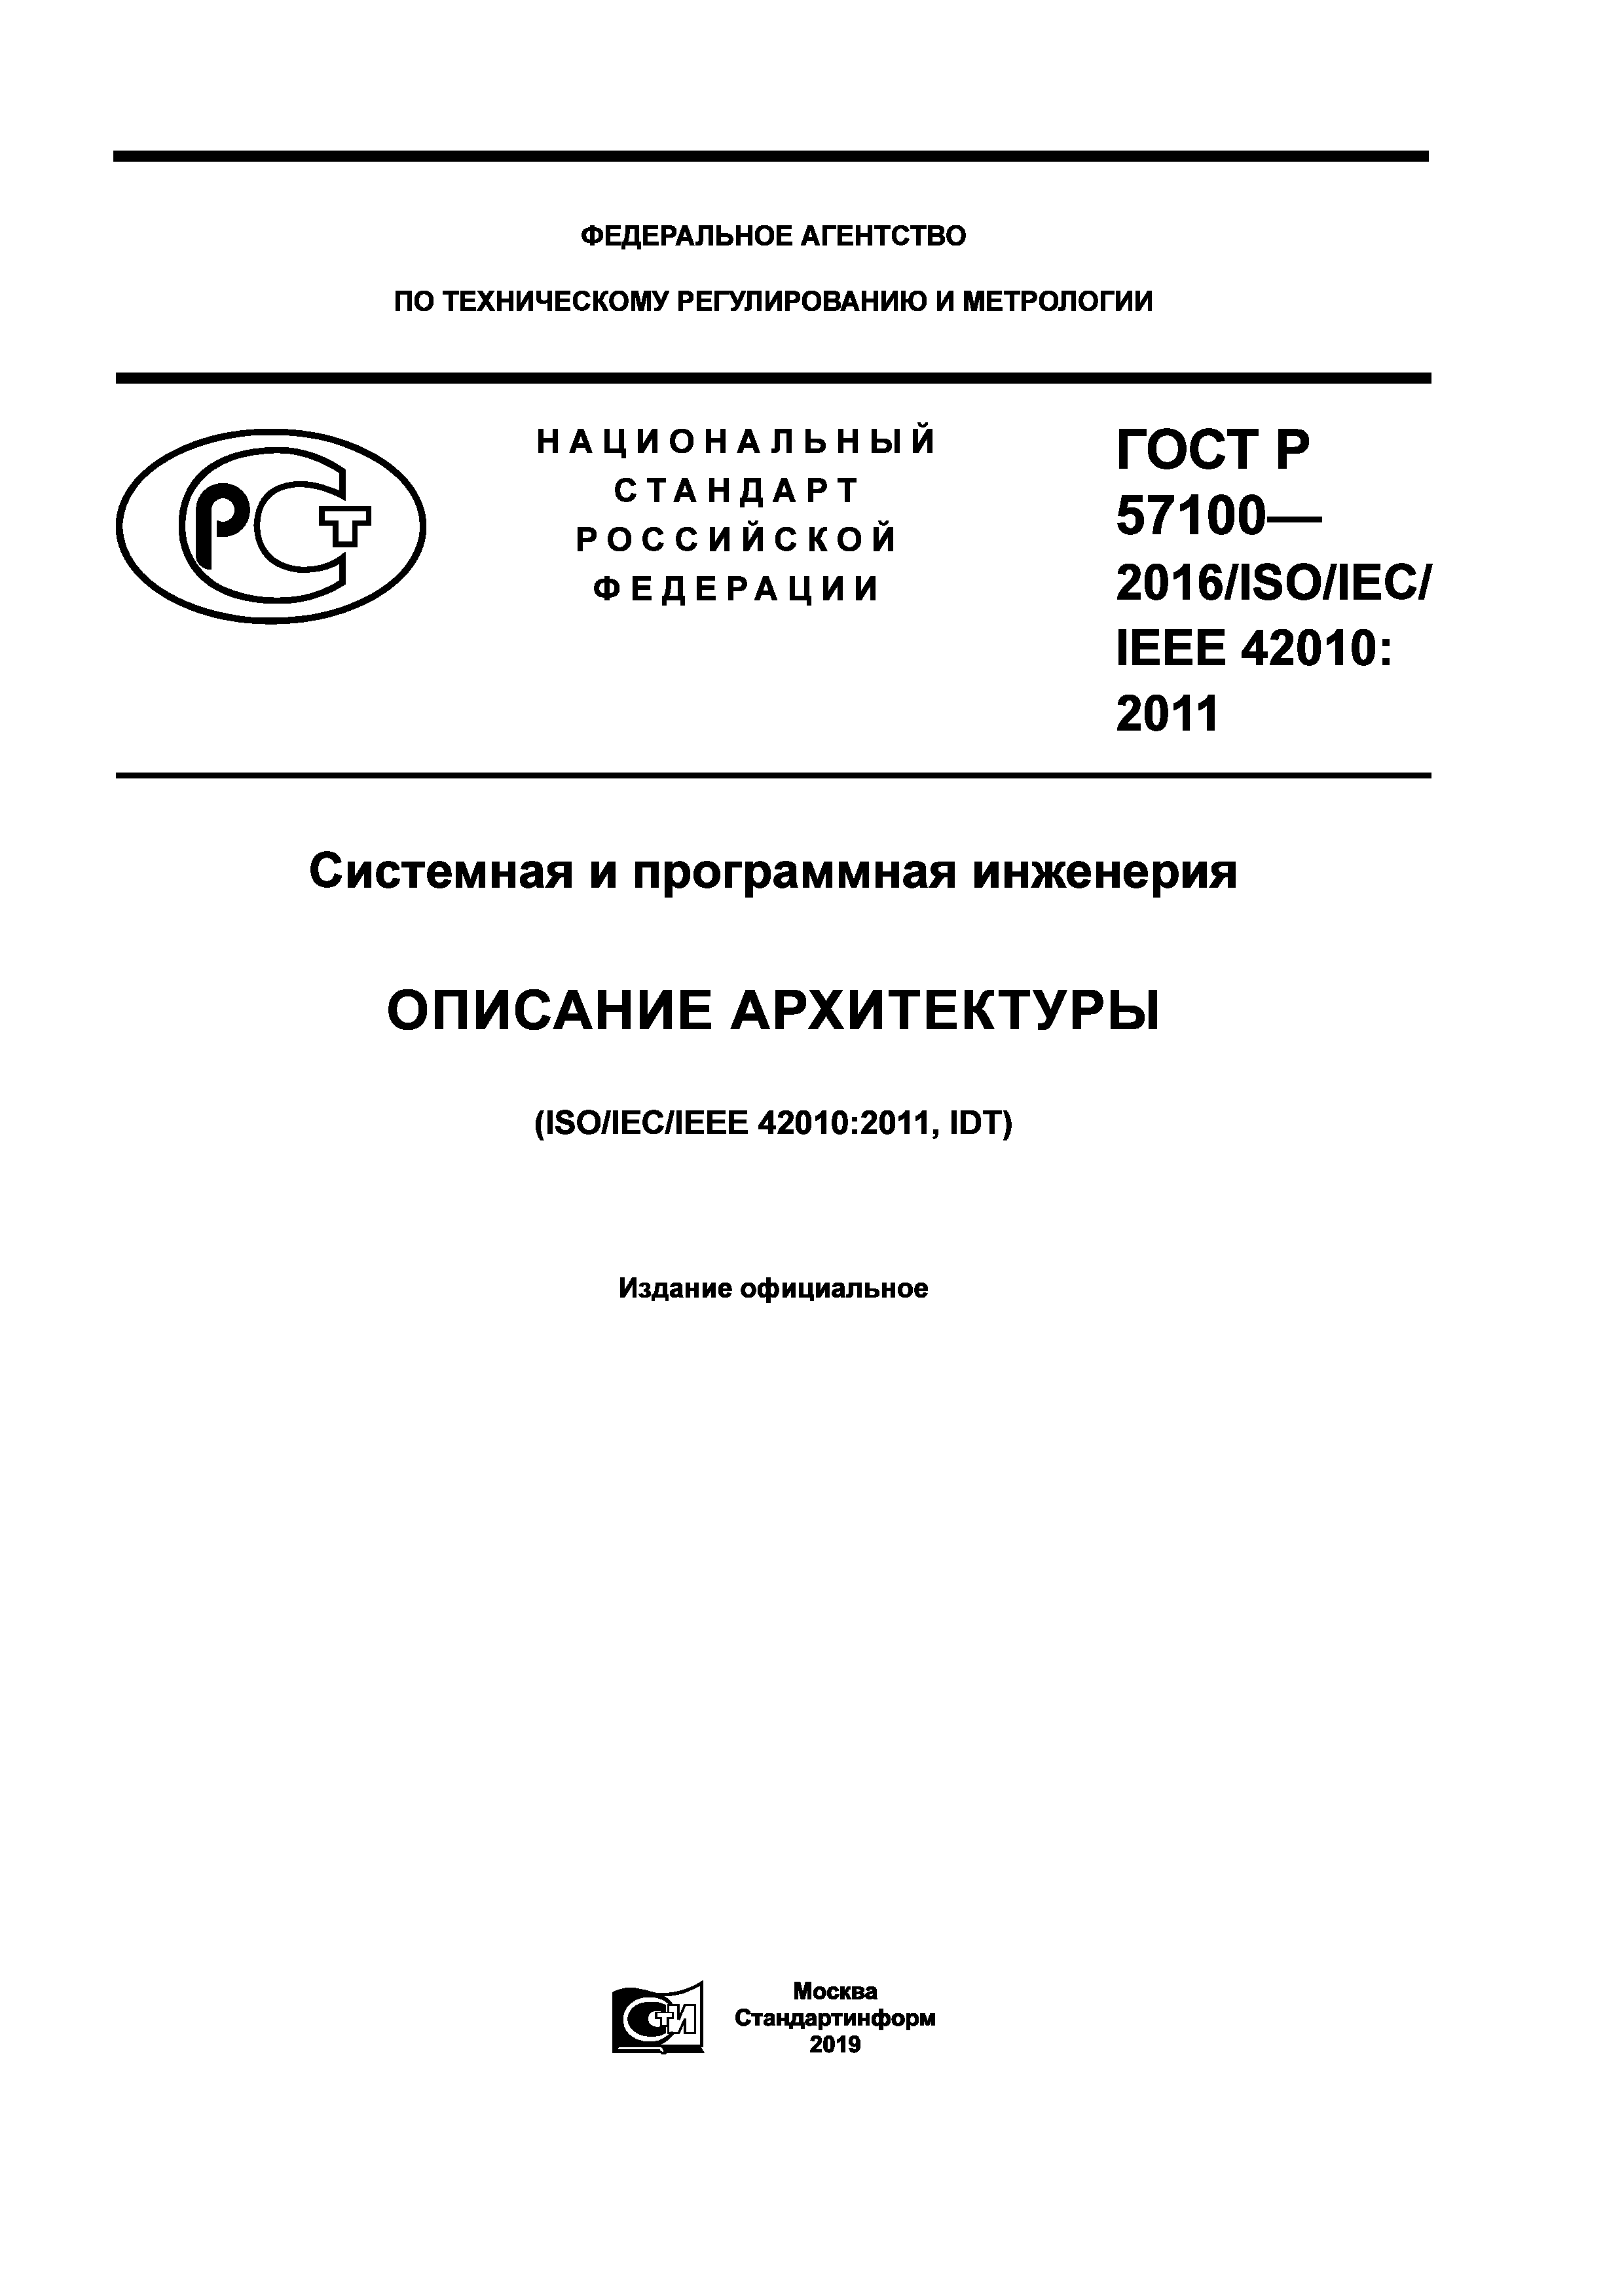 ГОСТ Р 57100-2016